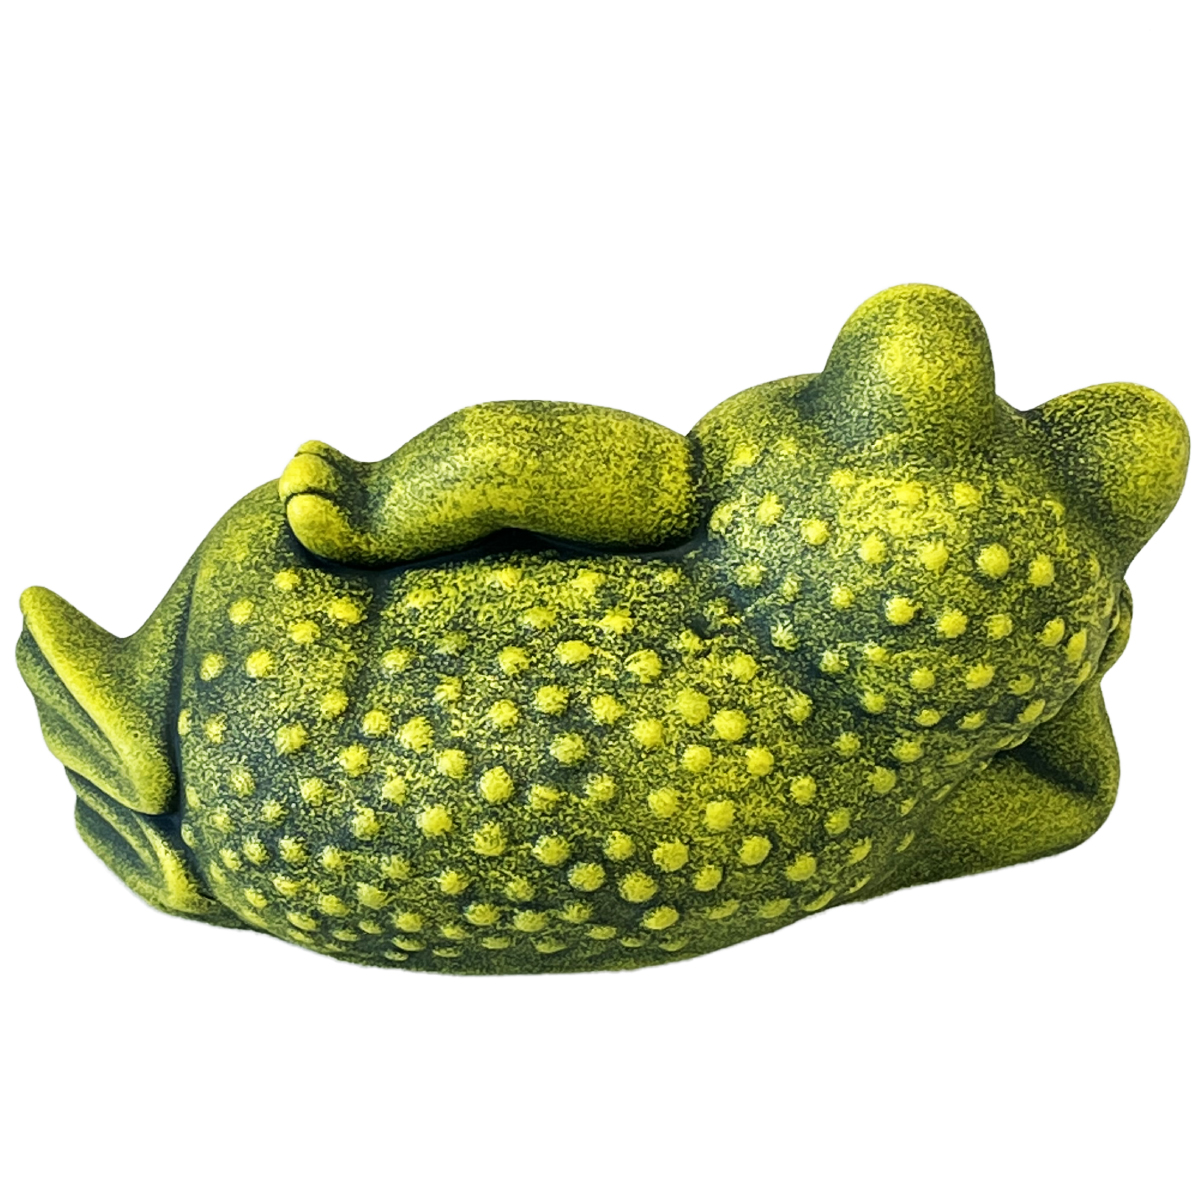 Outdoor compatible decorative frog